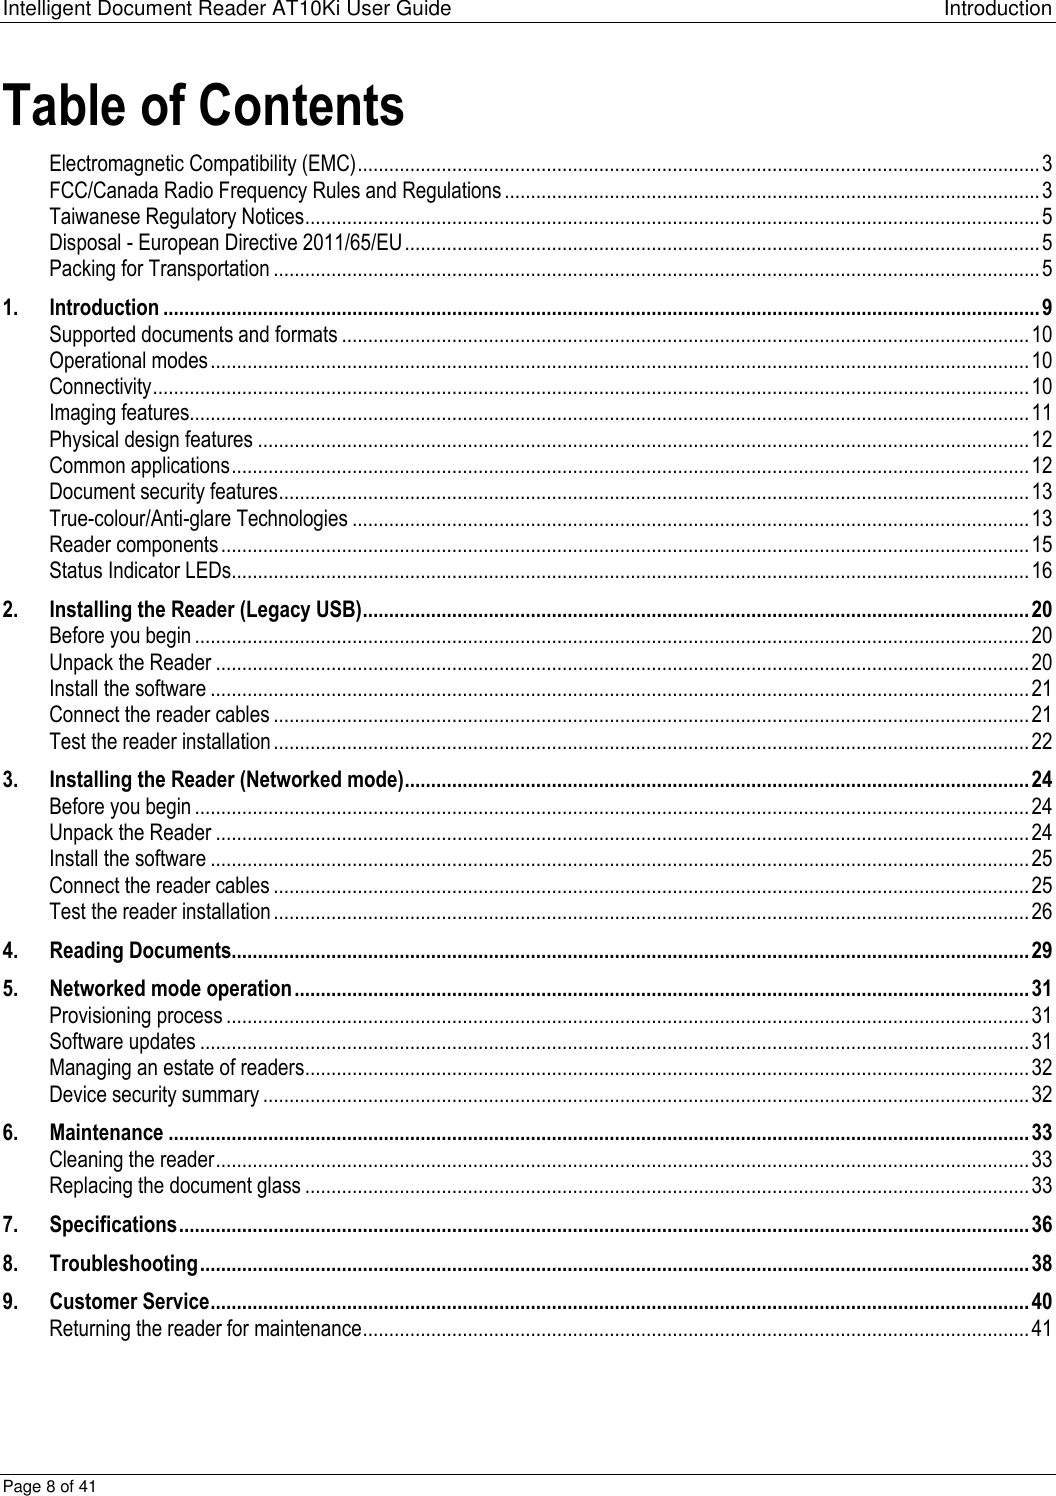 Page 8 of Thales DIS USA PR01523 ation Scanner User Manual